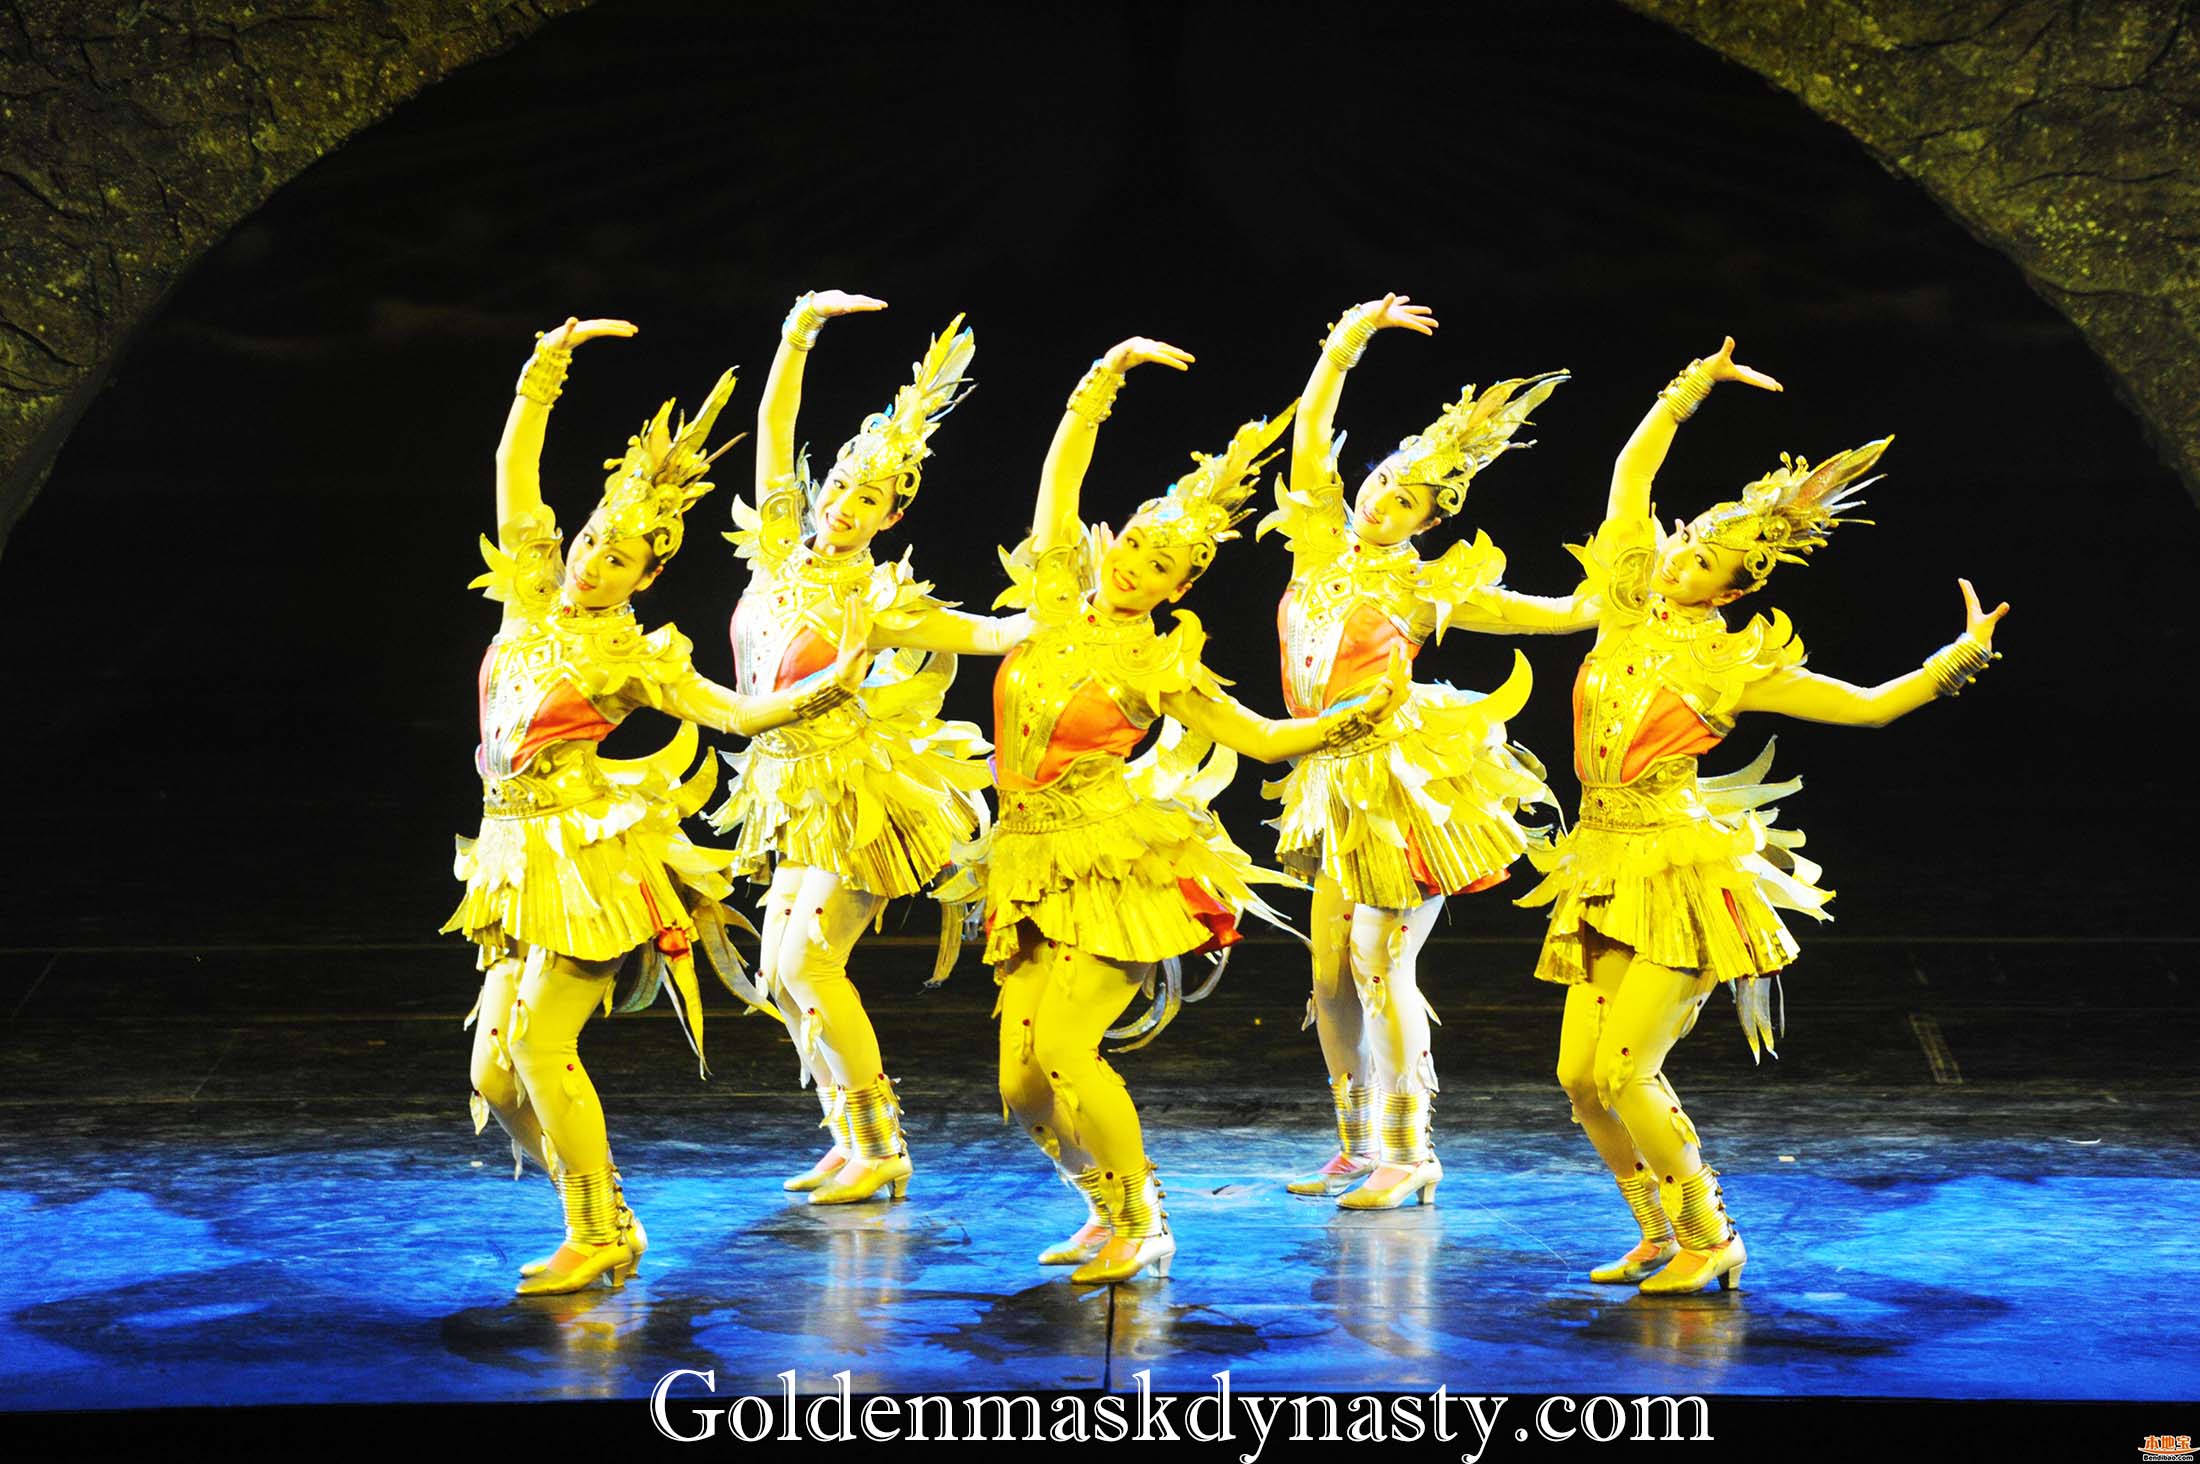 The Golden Mask Dynasty China - Golden Mask Dynasty